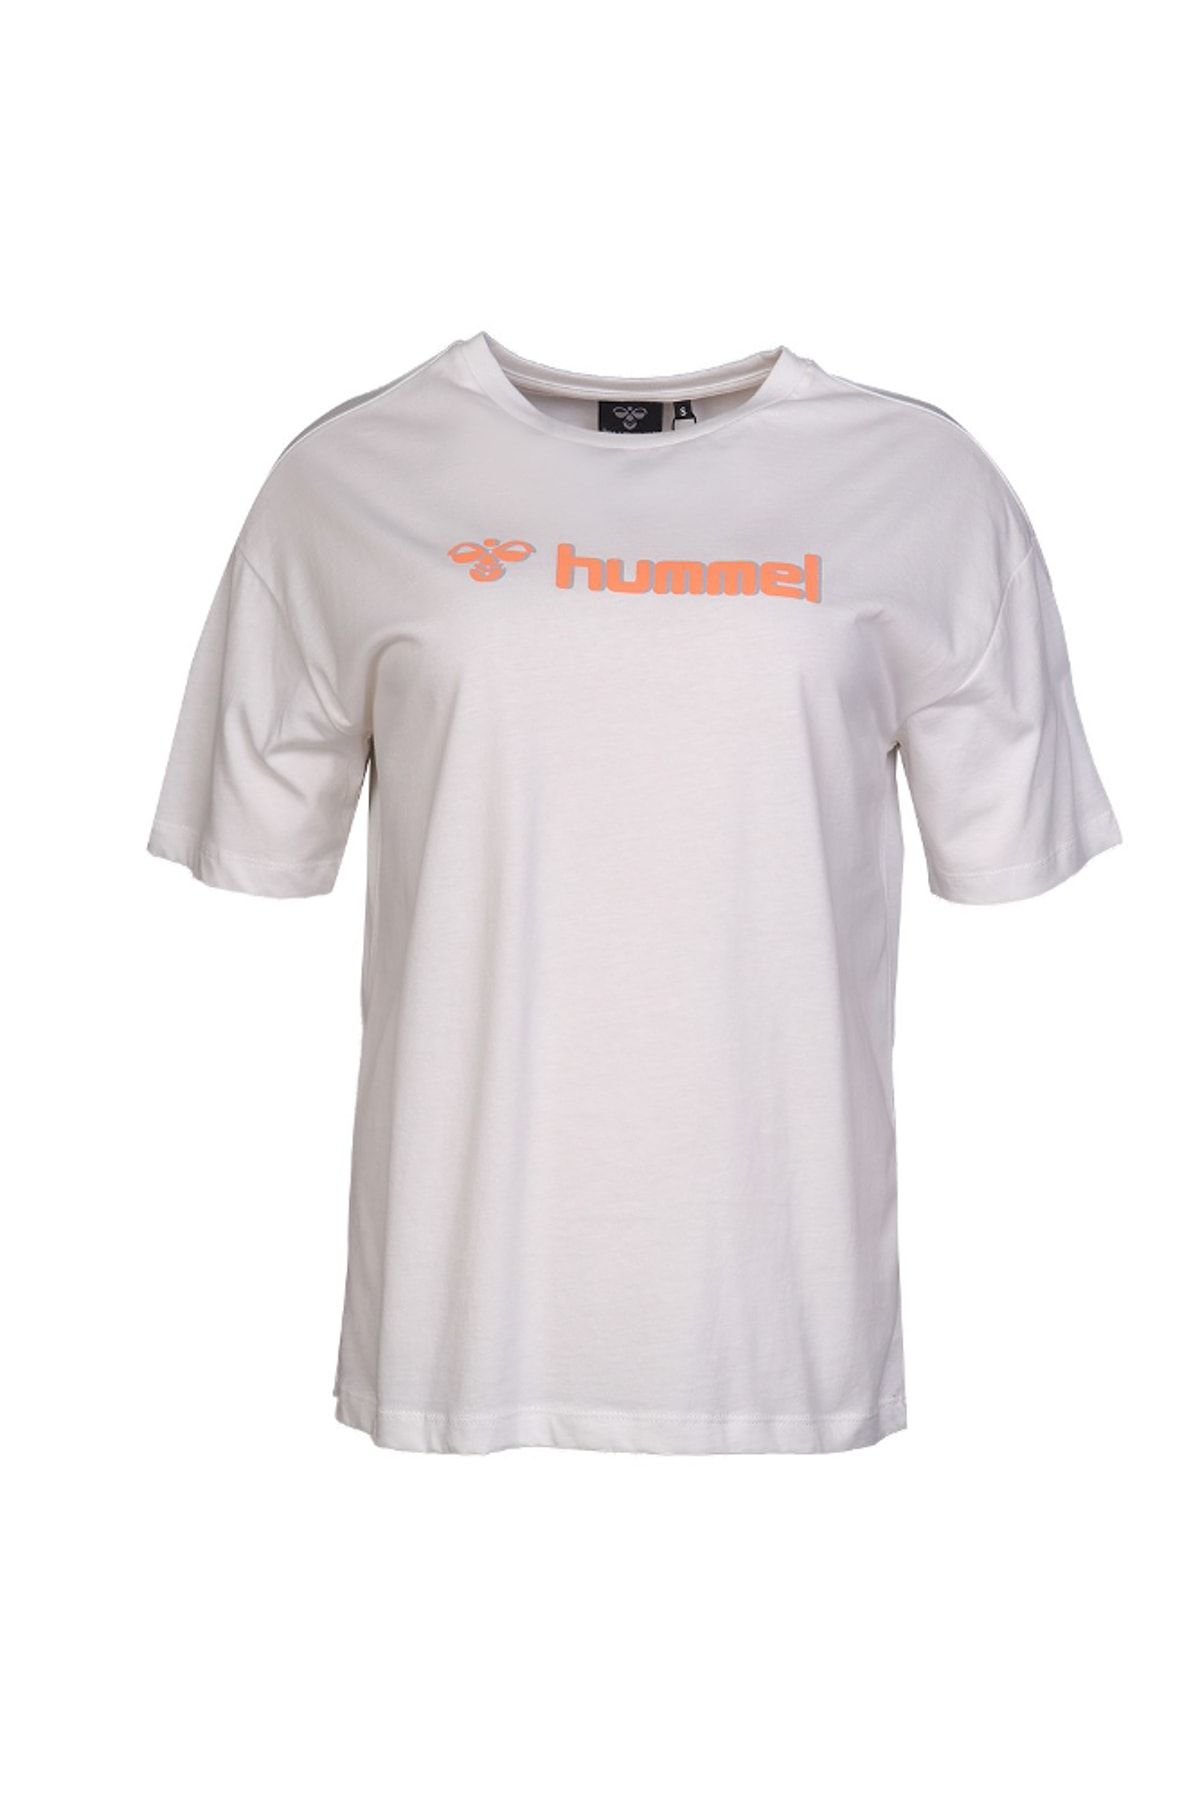 hummel Kadın Gudrun Kısa Kollu T-Shirt 910979-9003